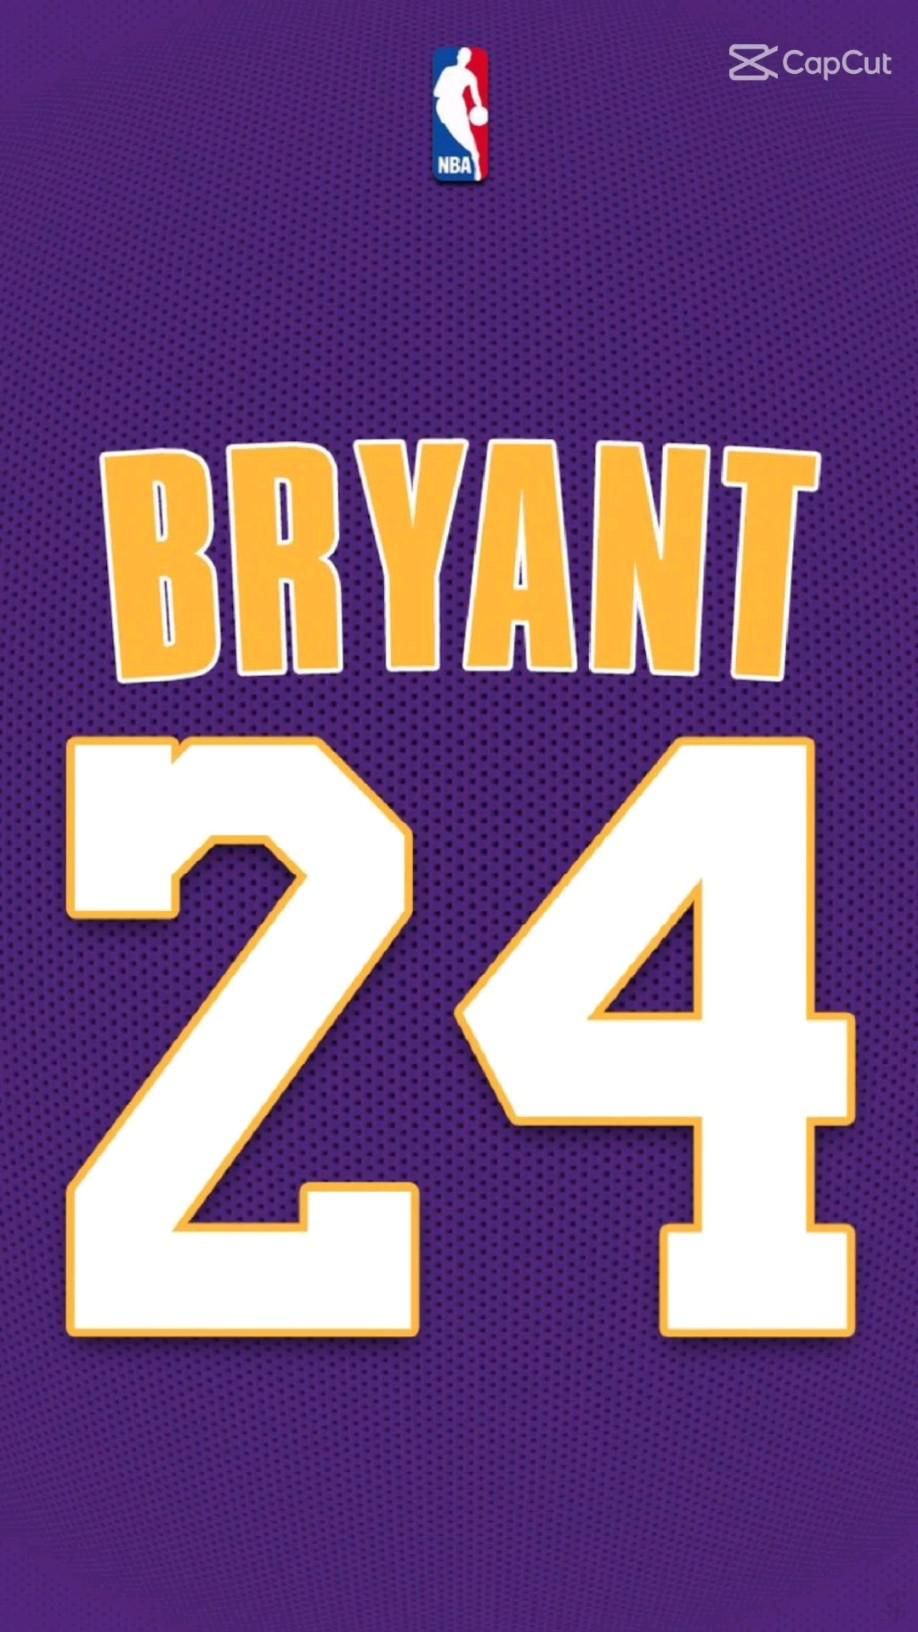 Kobe Bryant Jersey Wallpapers